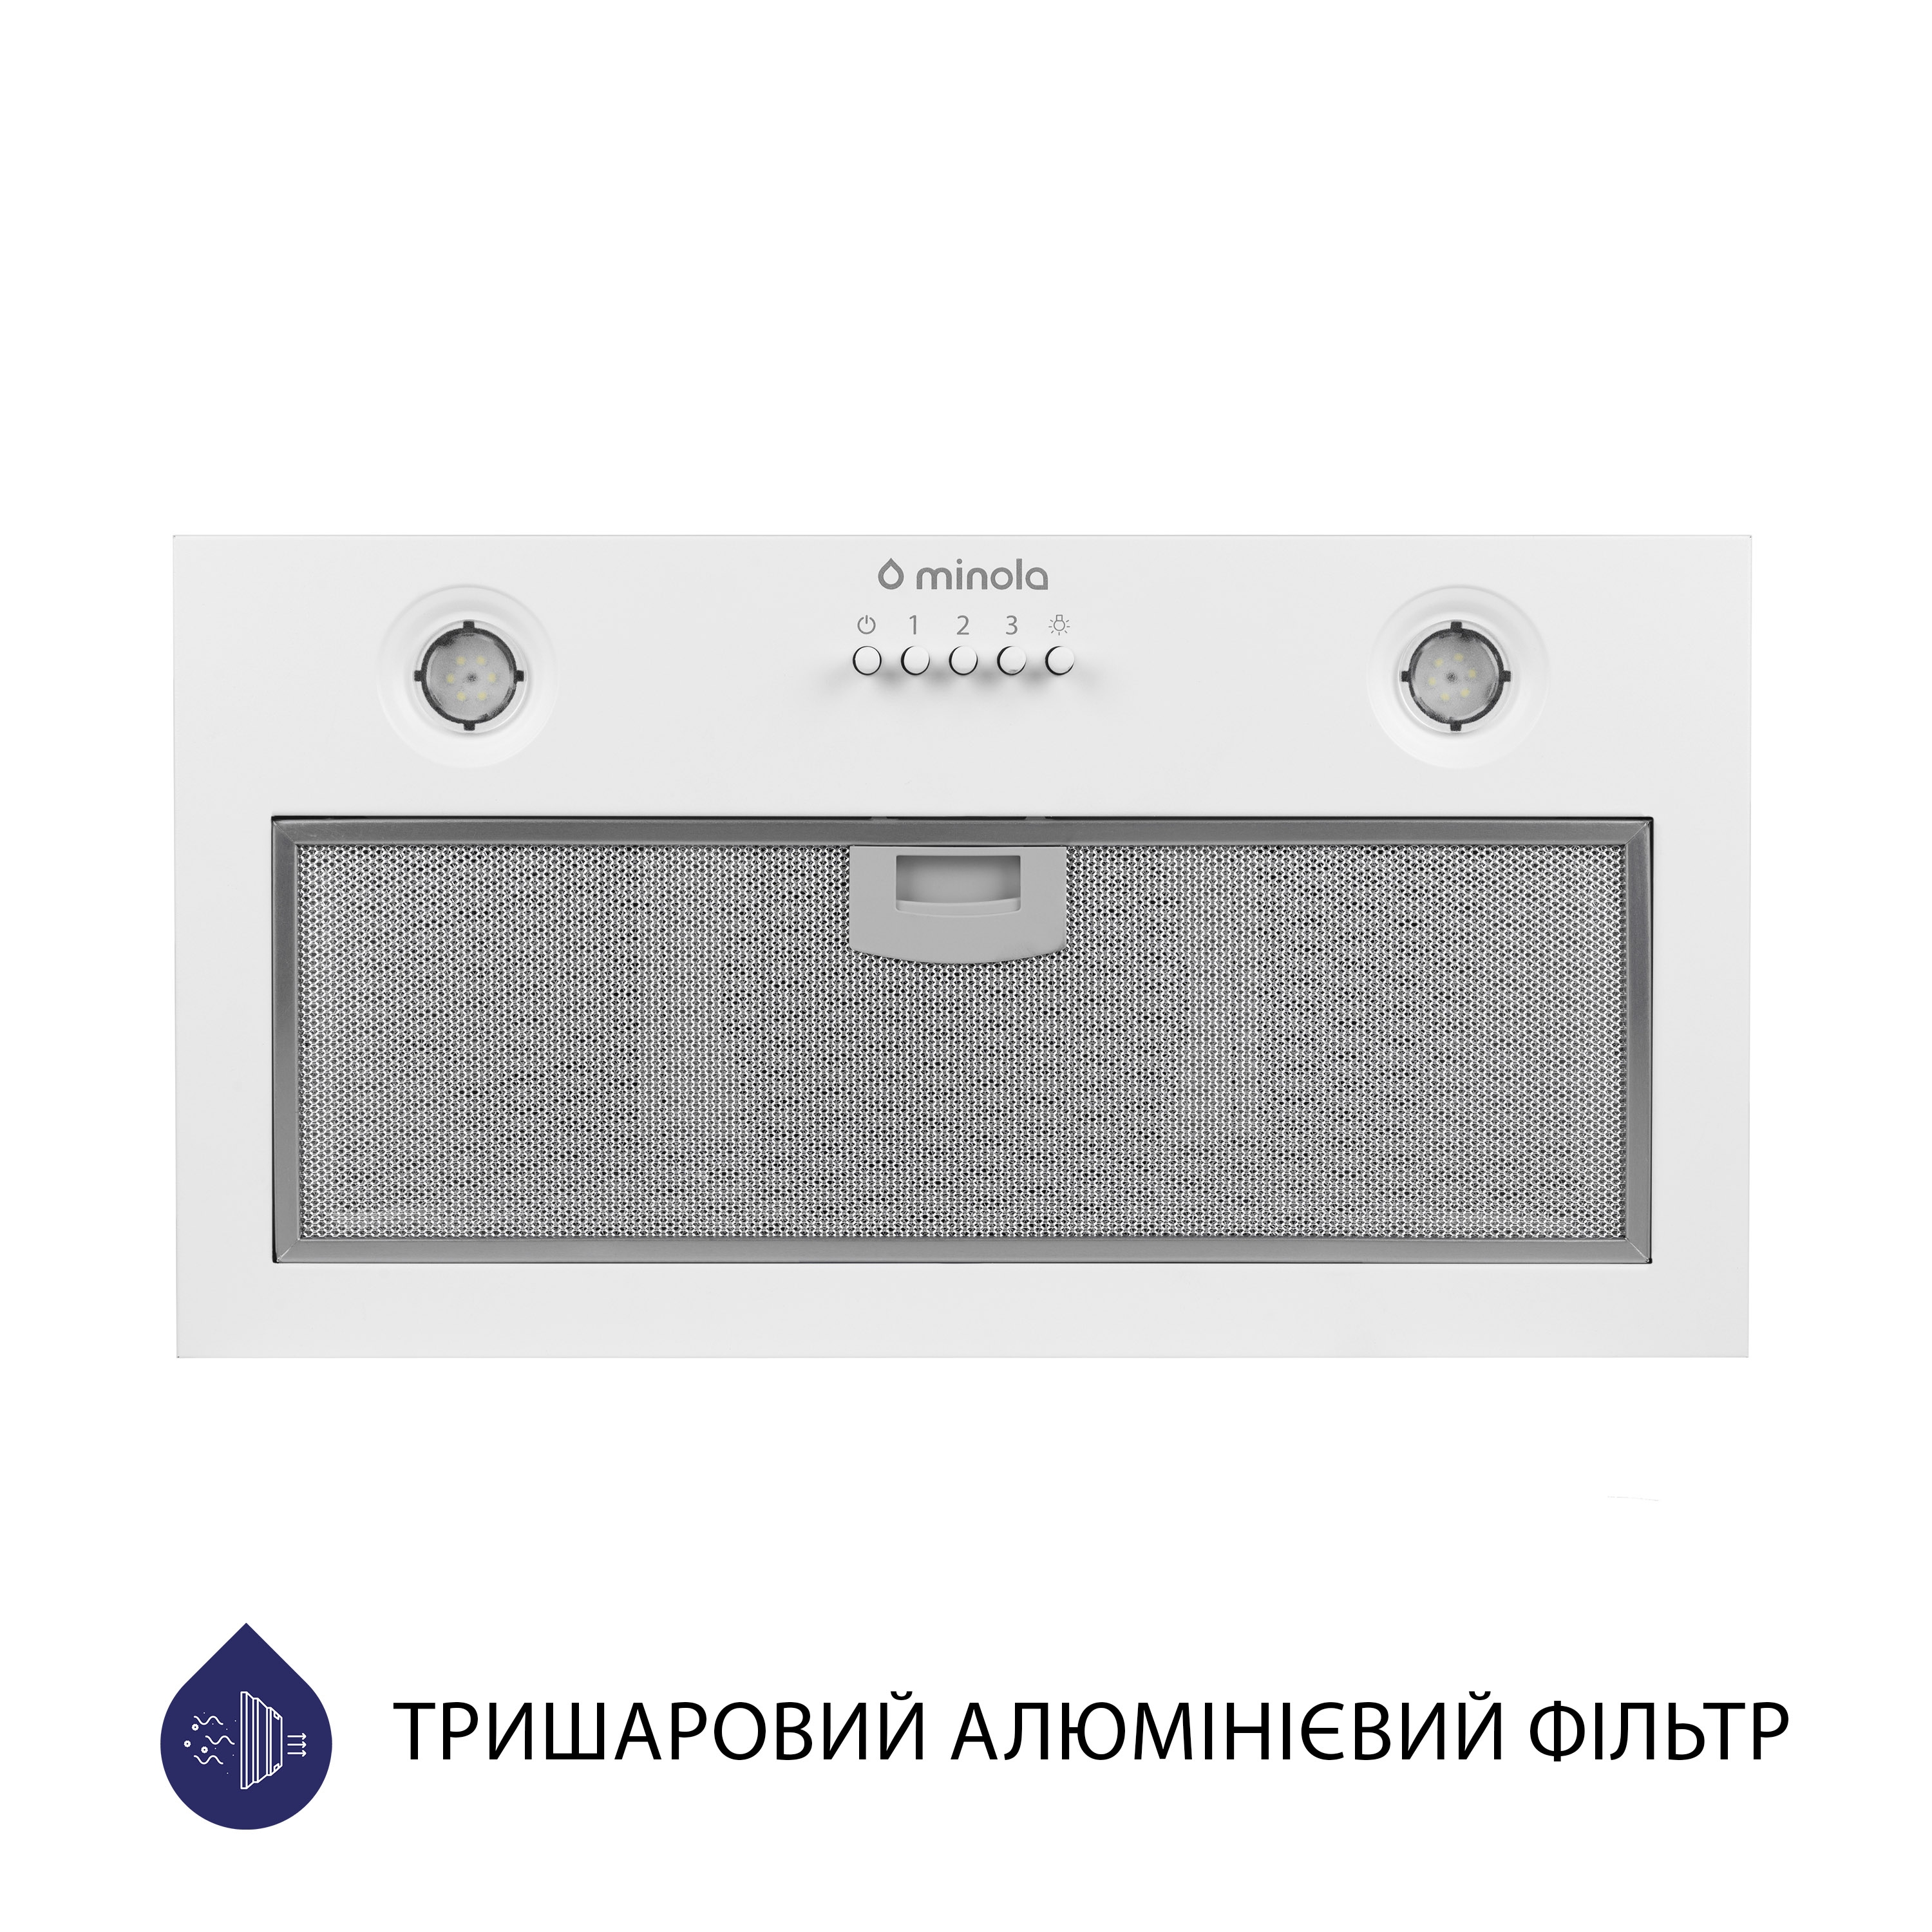 Витяжка кухонная полновстраиваемая Minola HBI 5204 WH 700 LED цена 3299.00 грн - фотография 2